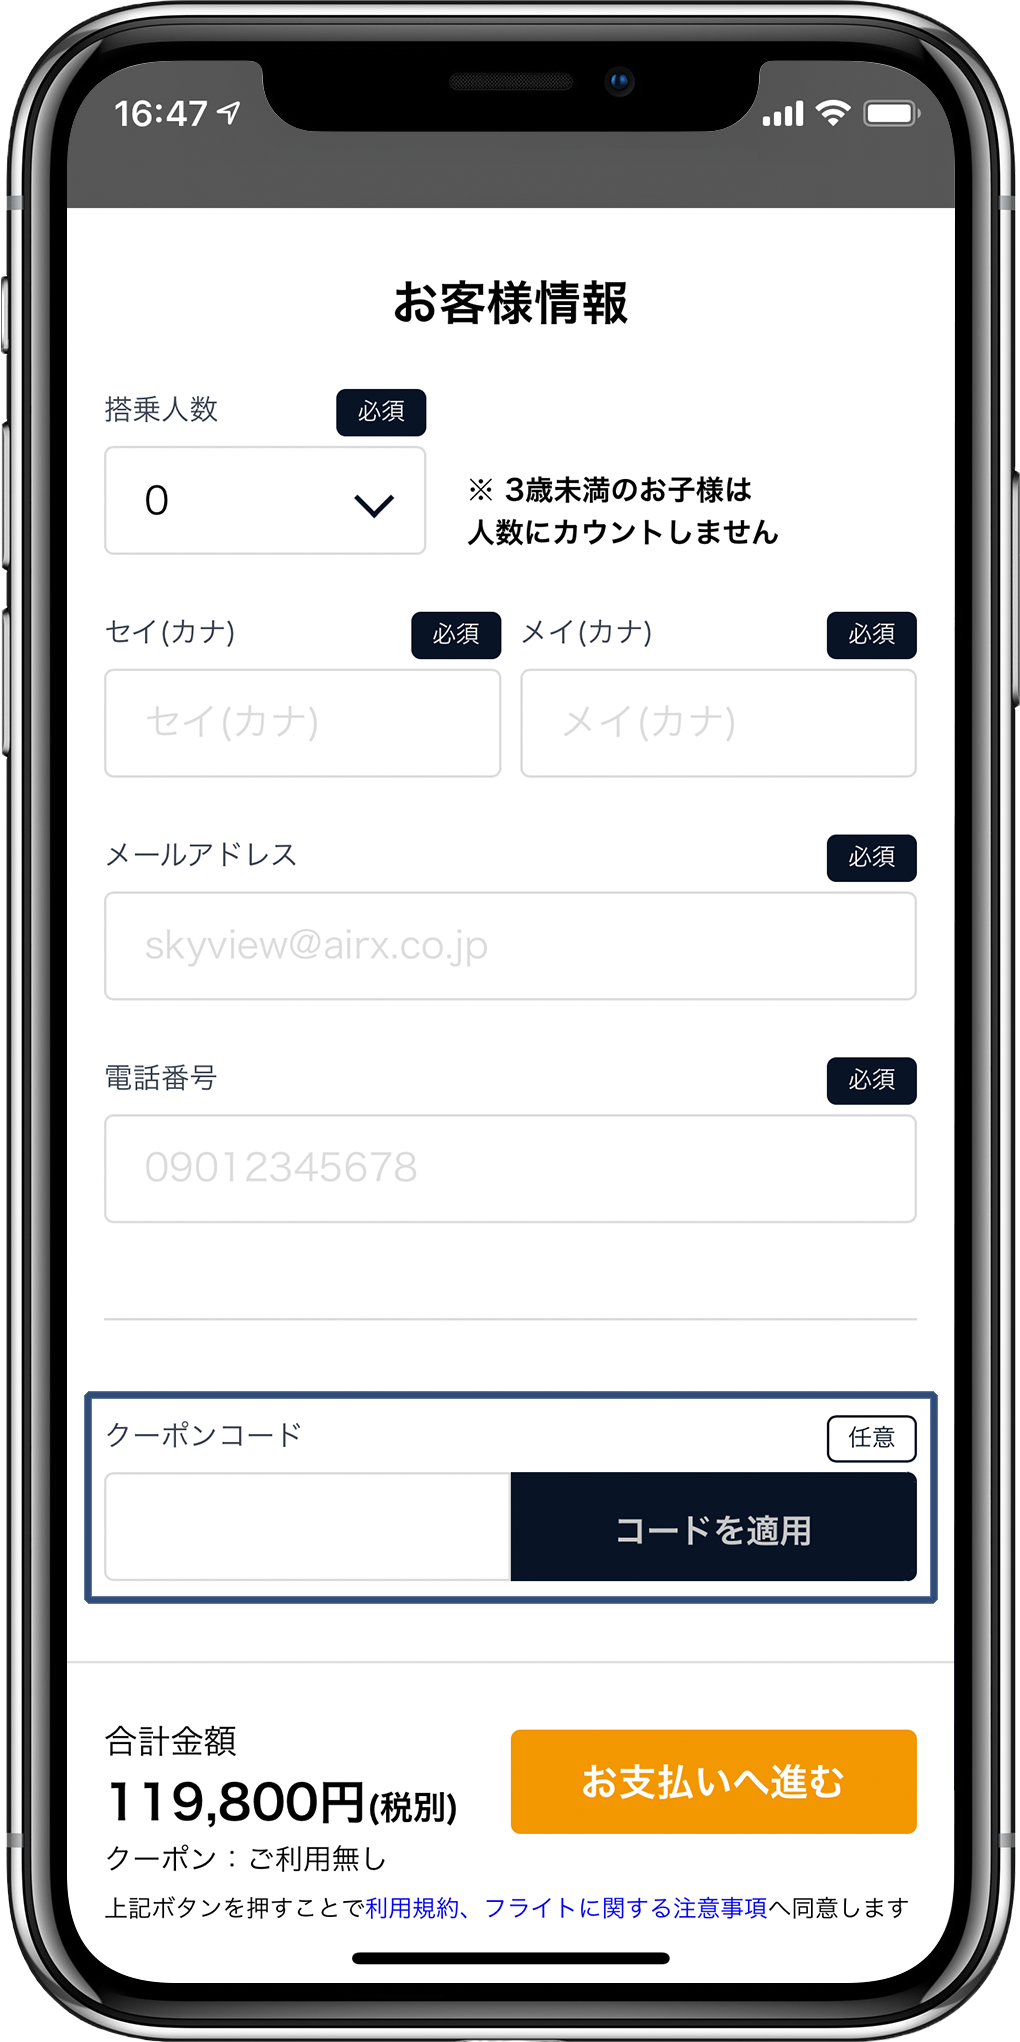 Campaign iphone jp